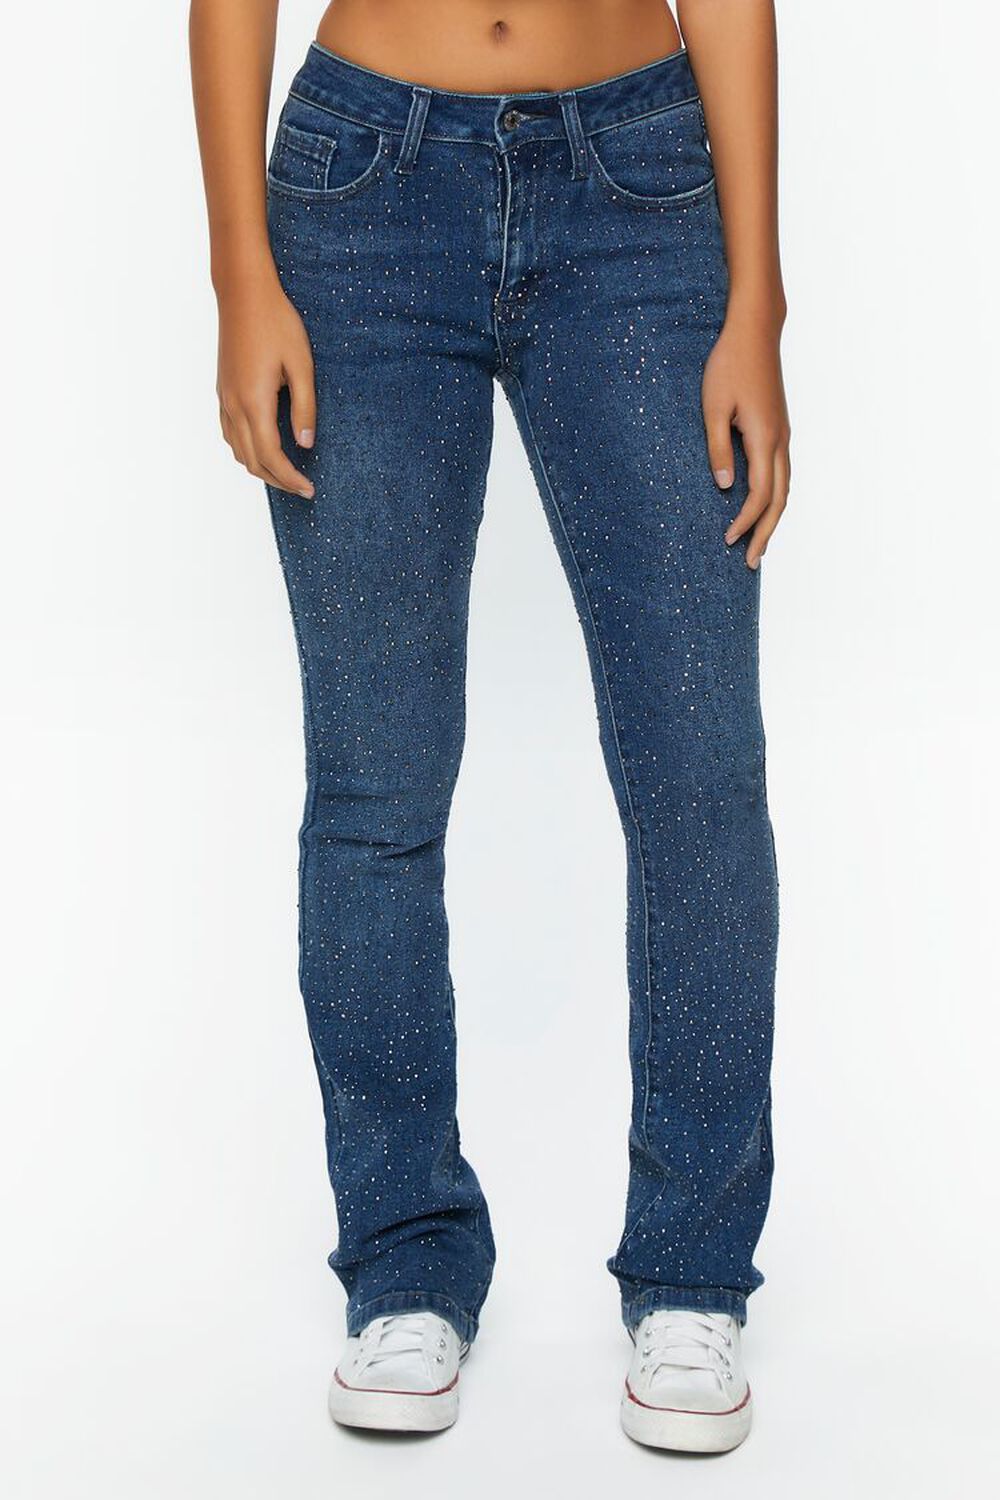 DARK DENIM Rhinestone Mid-Rise Bootcut Jeans, image 1